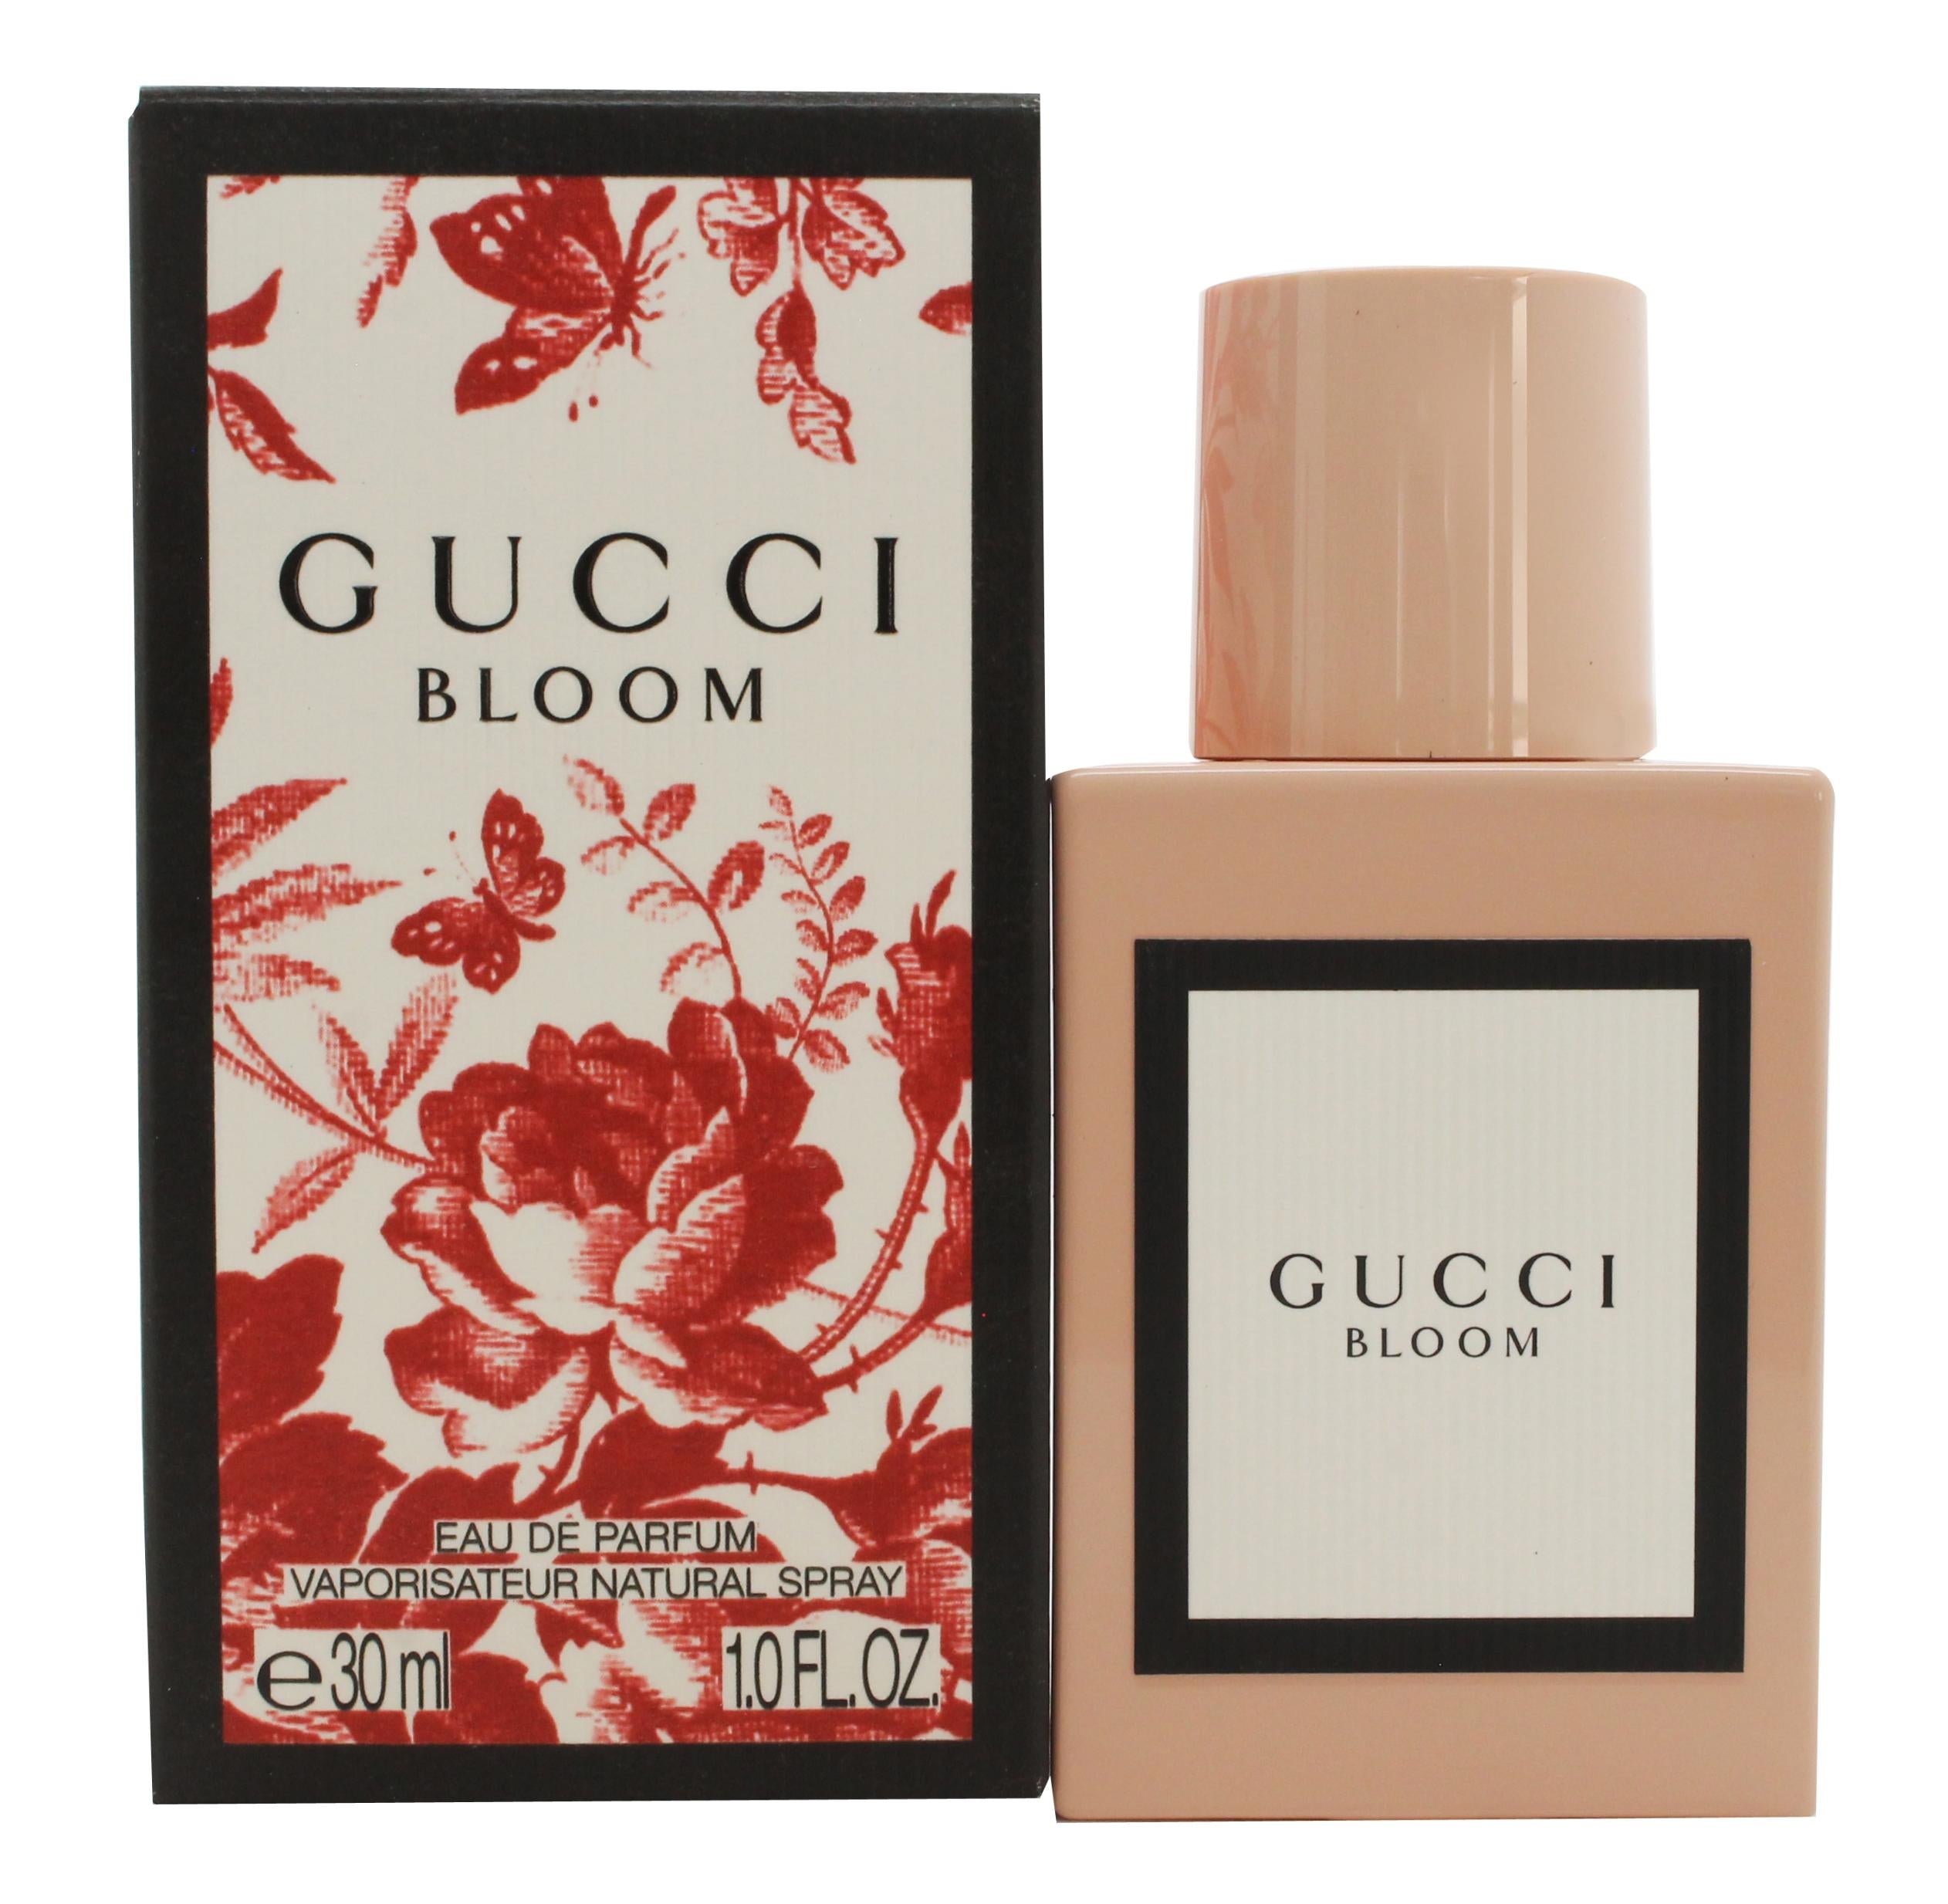 View Gucci Bloom Eau de Parfum 30ml Spray information